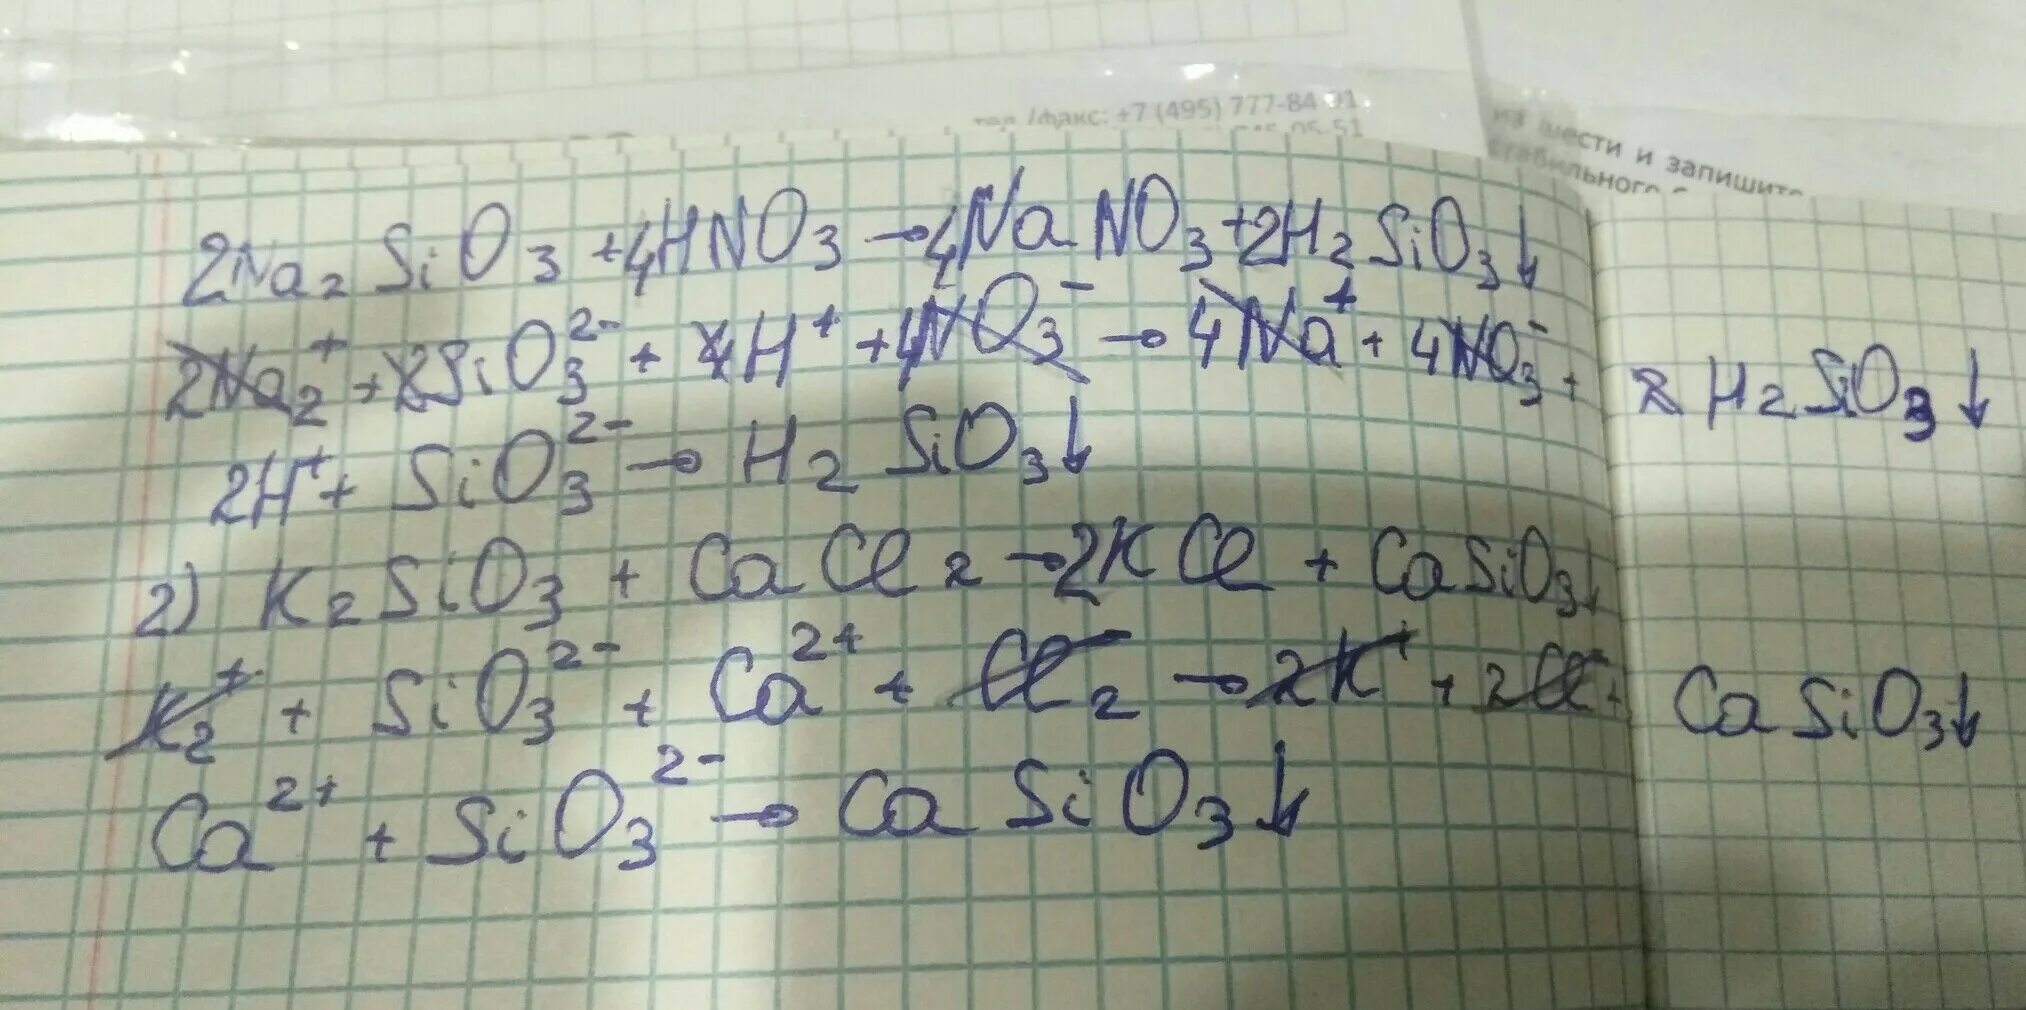 Sio2 реагирует с hcl. Na2sio3 hno3. K2sio3+hno3. Na2sio3 hno3 уравнение. Na2sio3 + hno3 ионное уравнение.